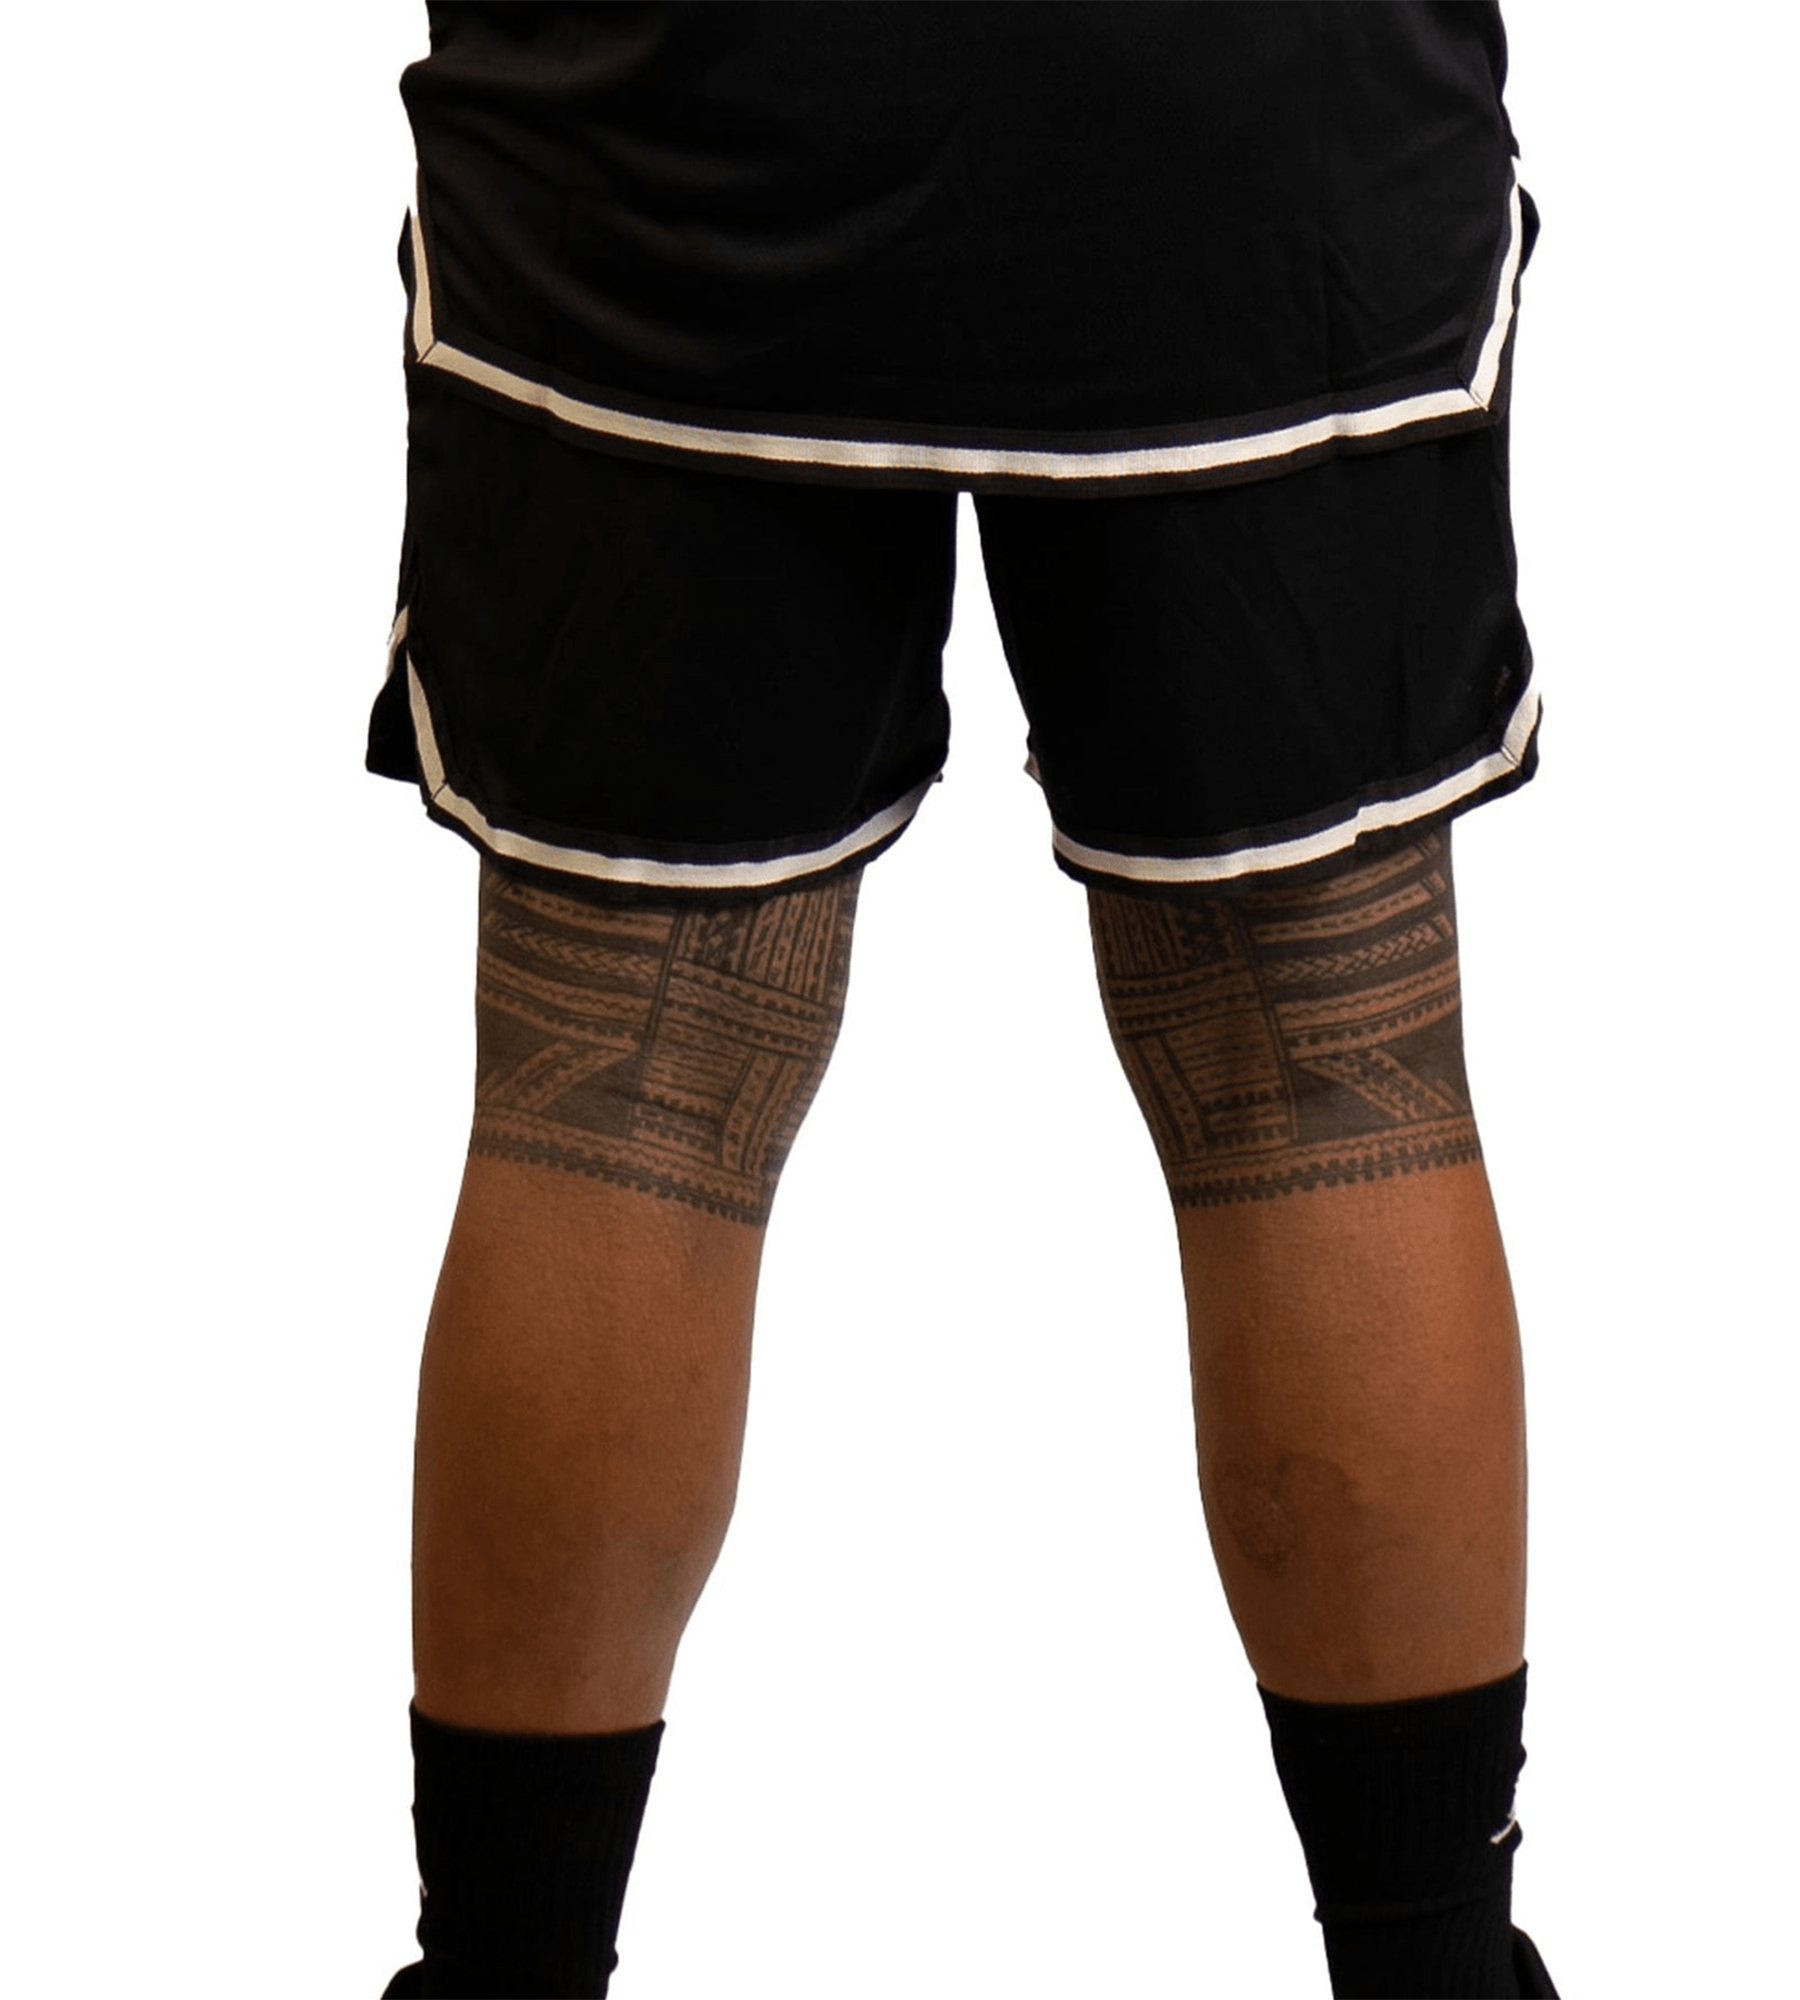 FitnessFox Basketball Shorts - BLACK